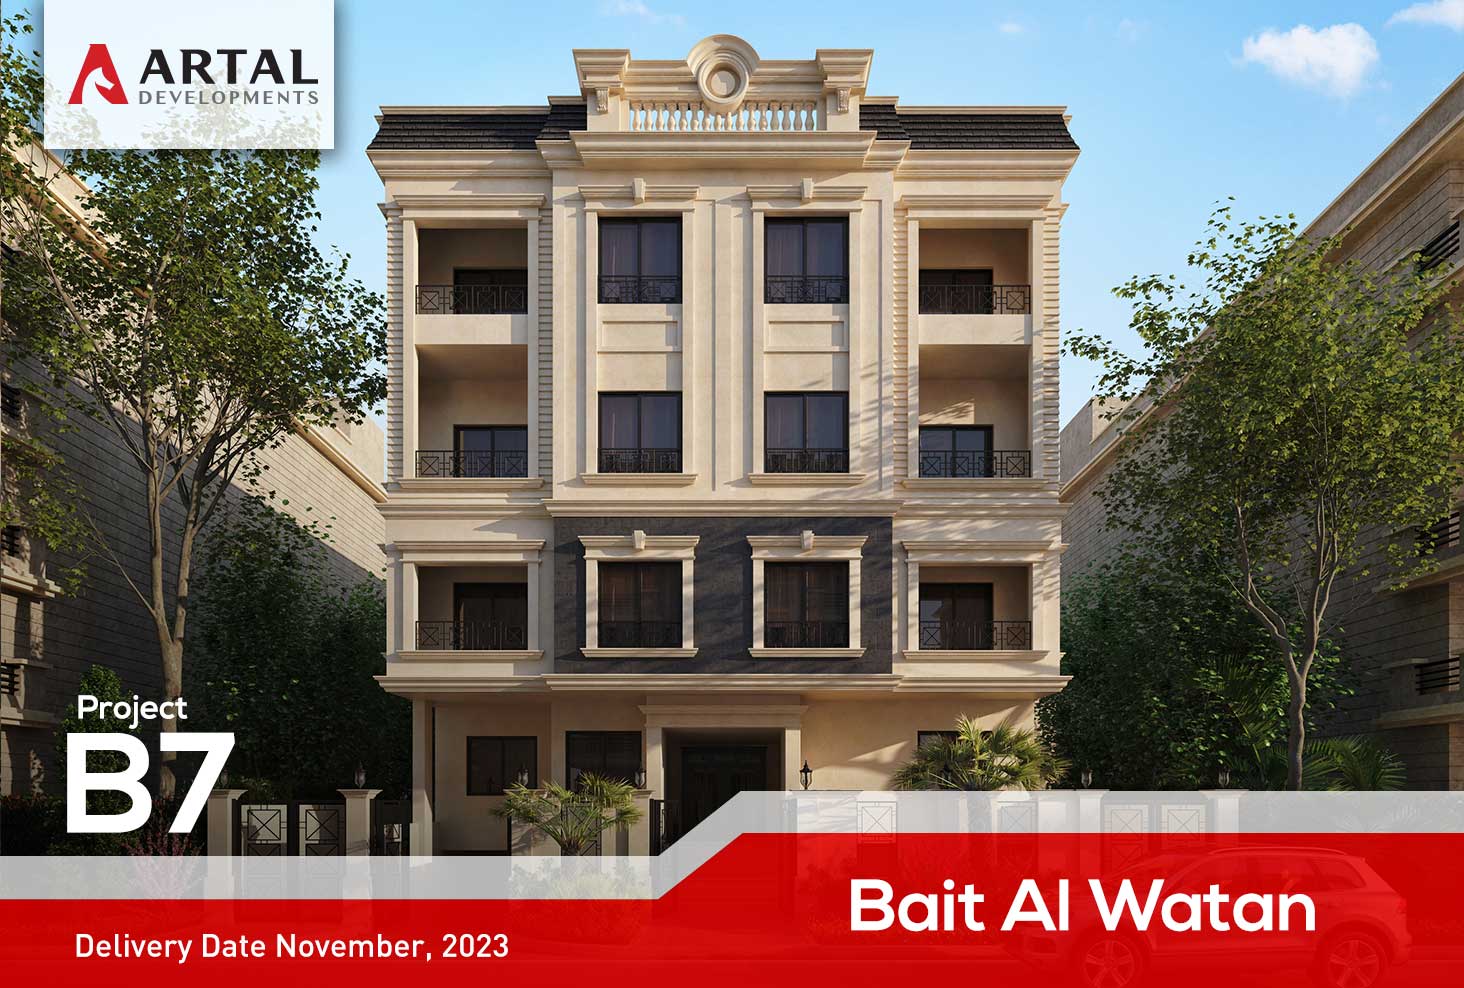 Bait Al watan Project B7 construction progress